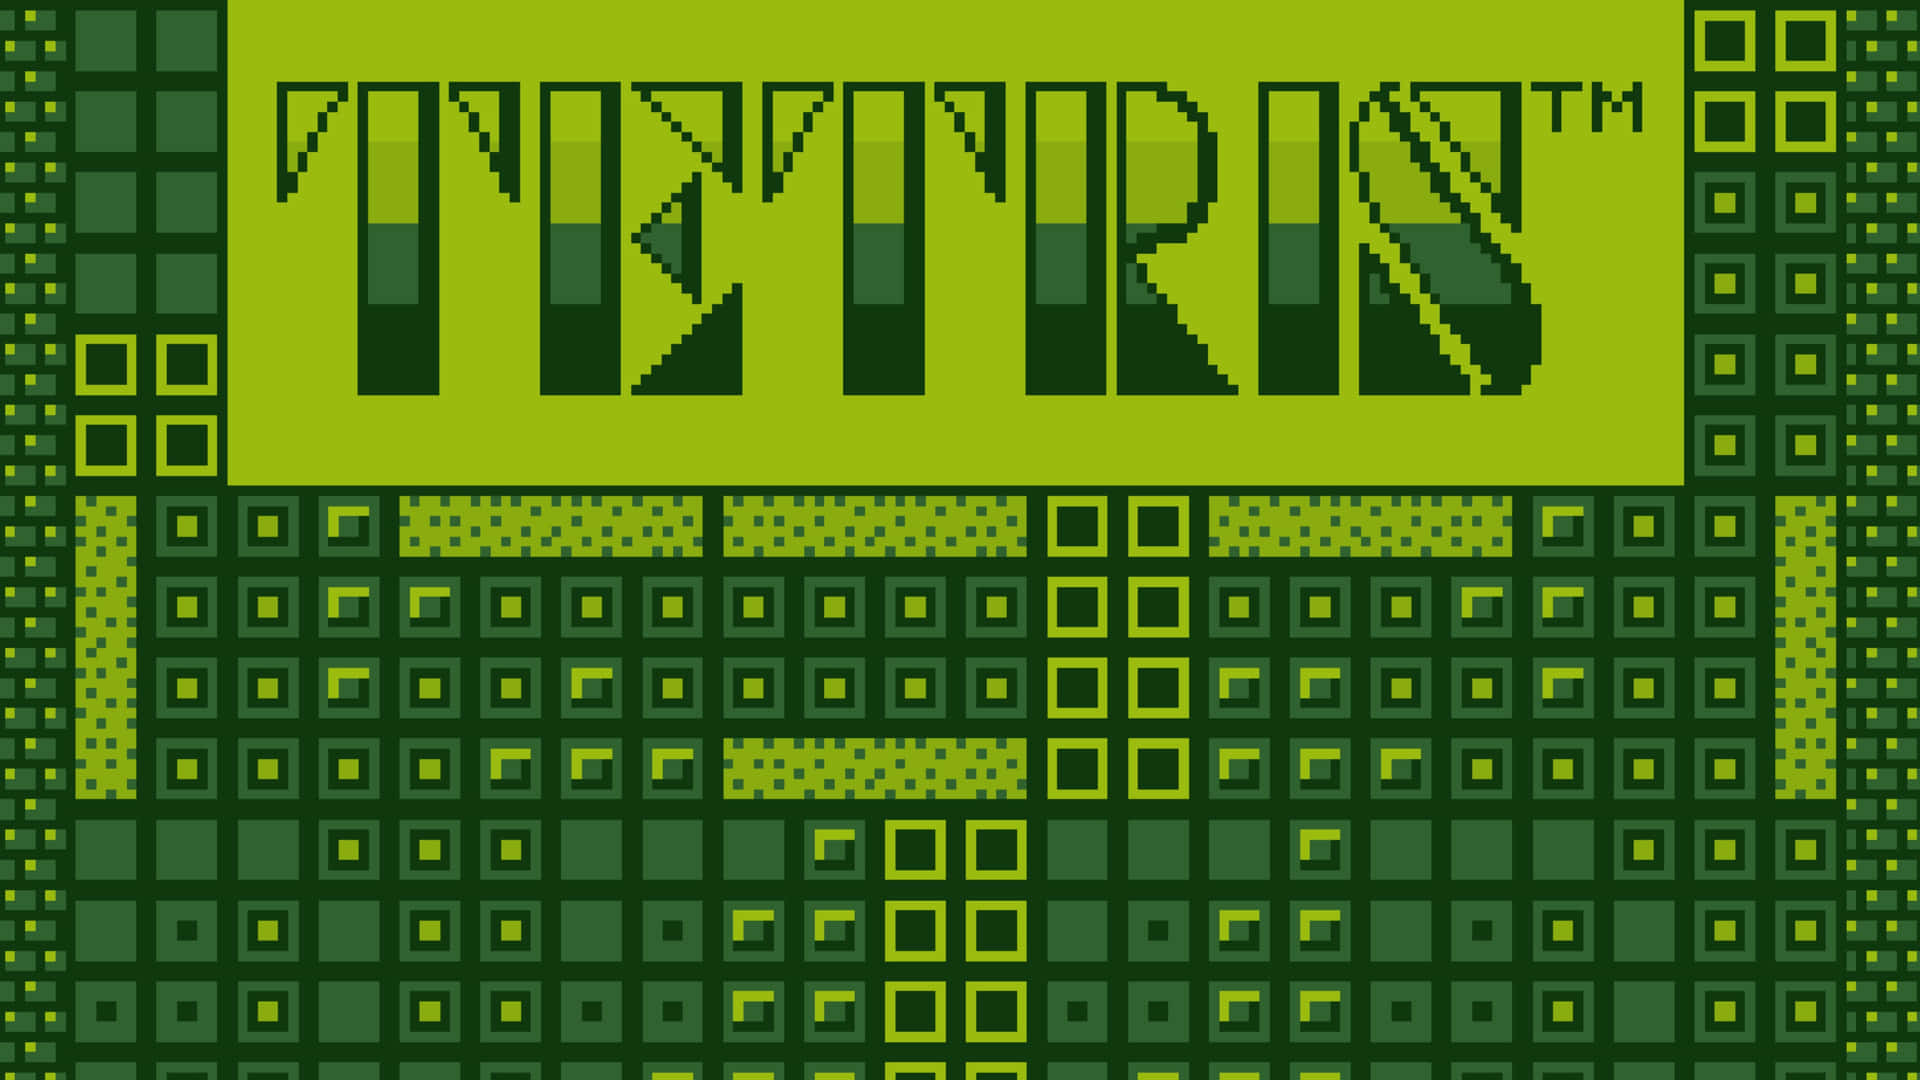 Vibrant Tetris Blocks Arranged in a Classic Pattern